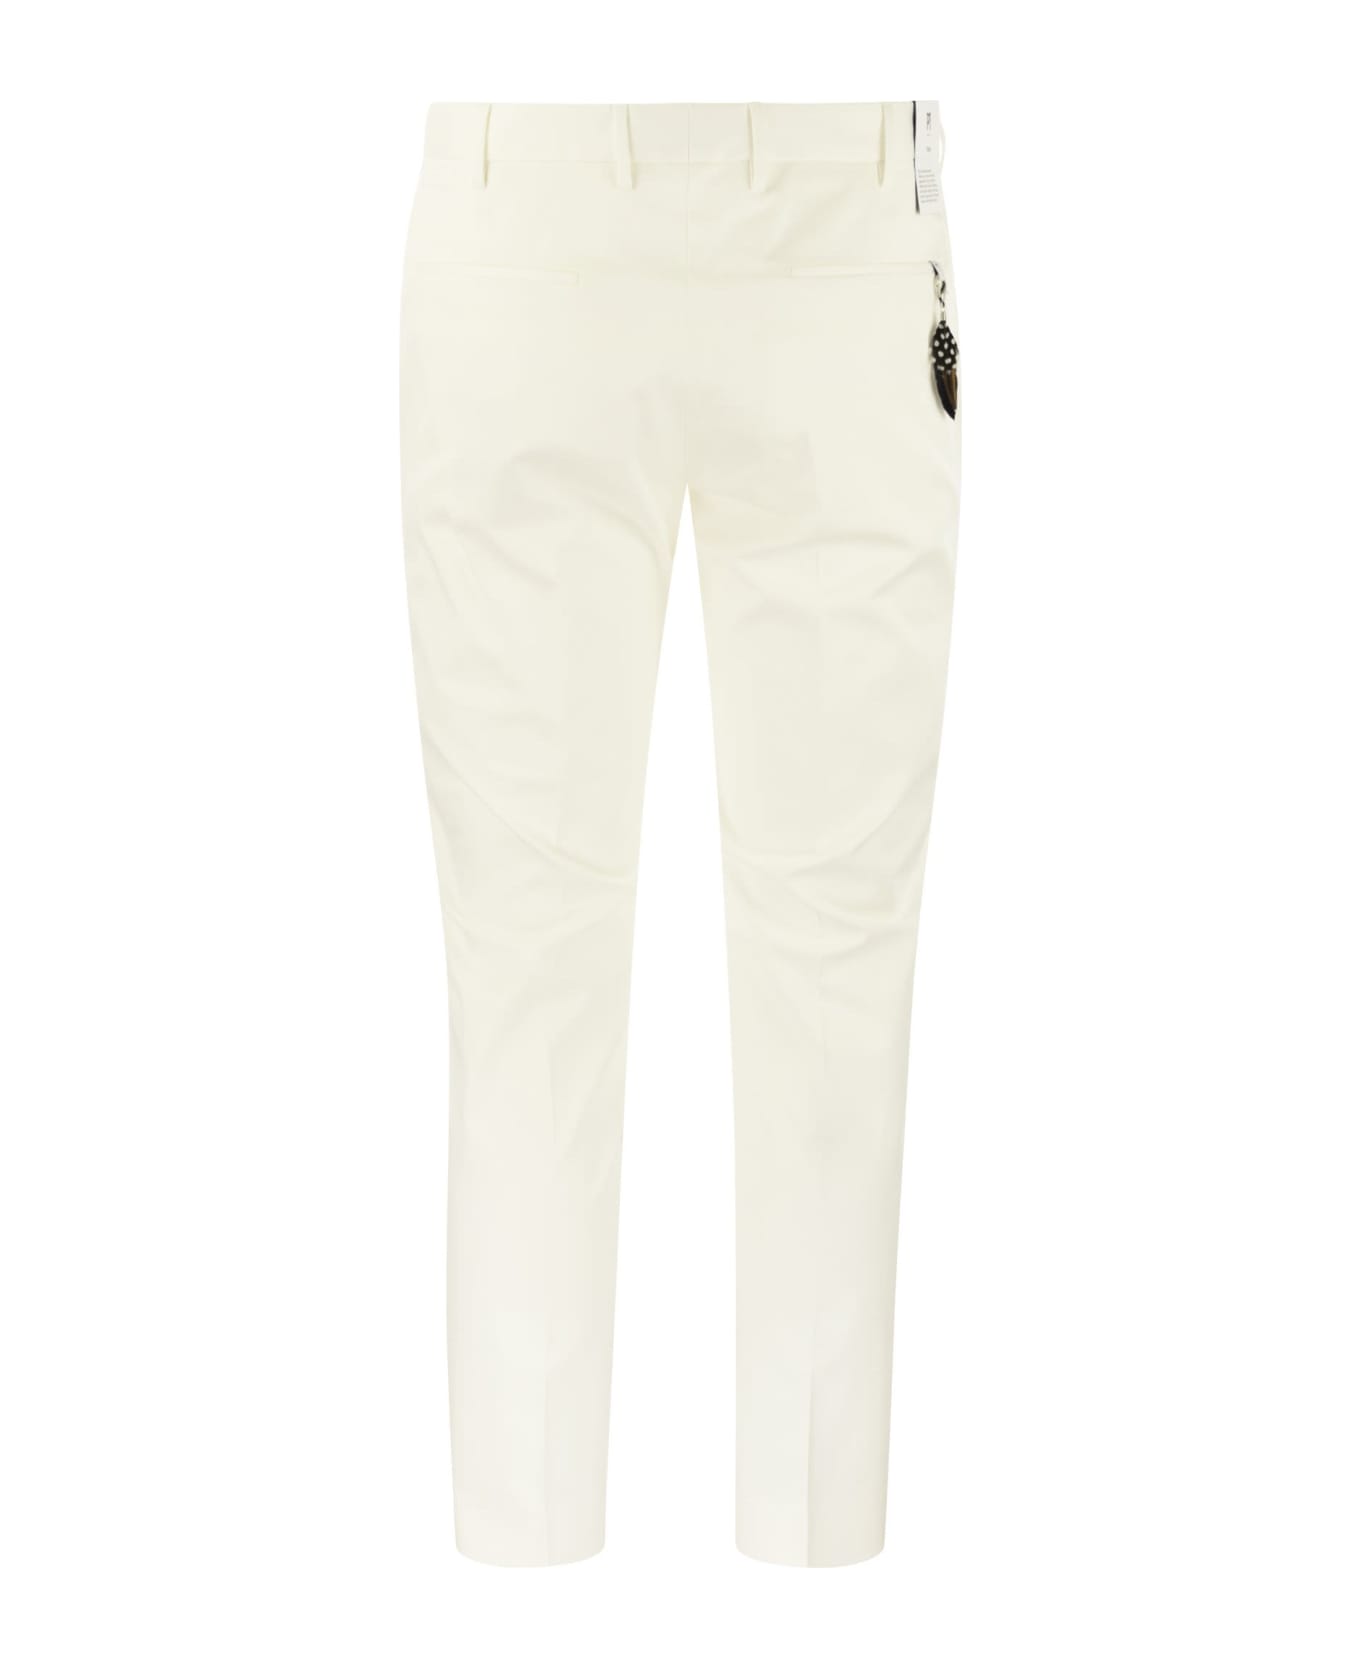 PT Torino Dieci - Cotton Trousers - White ボトムス